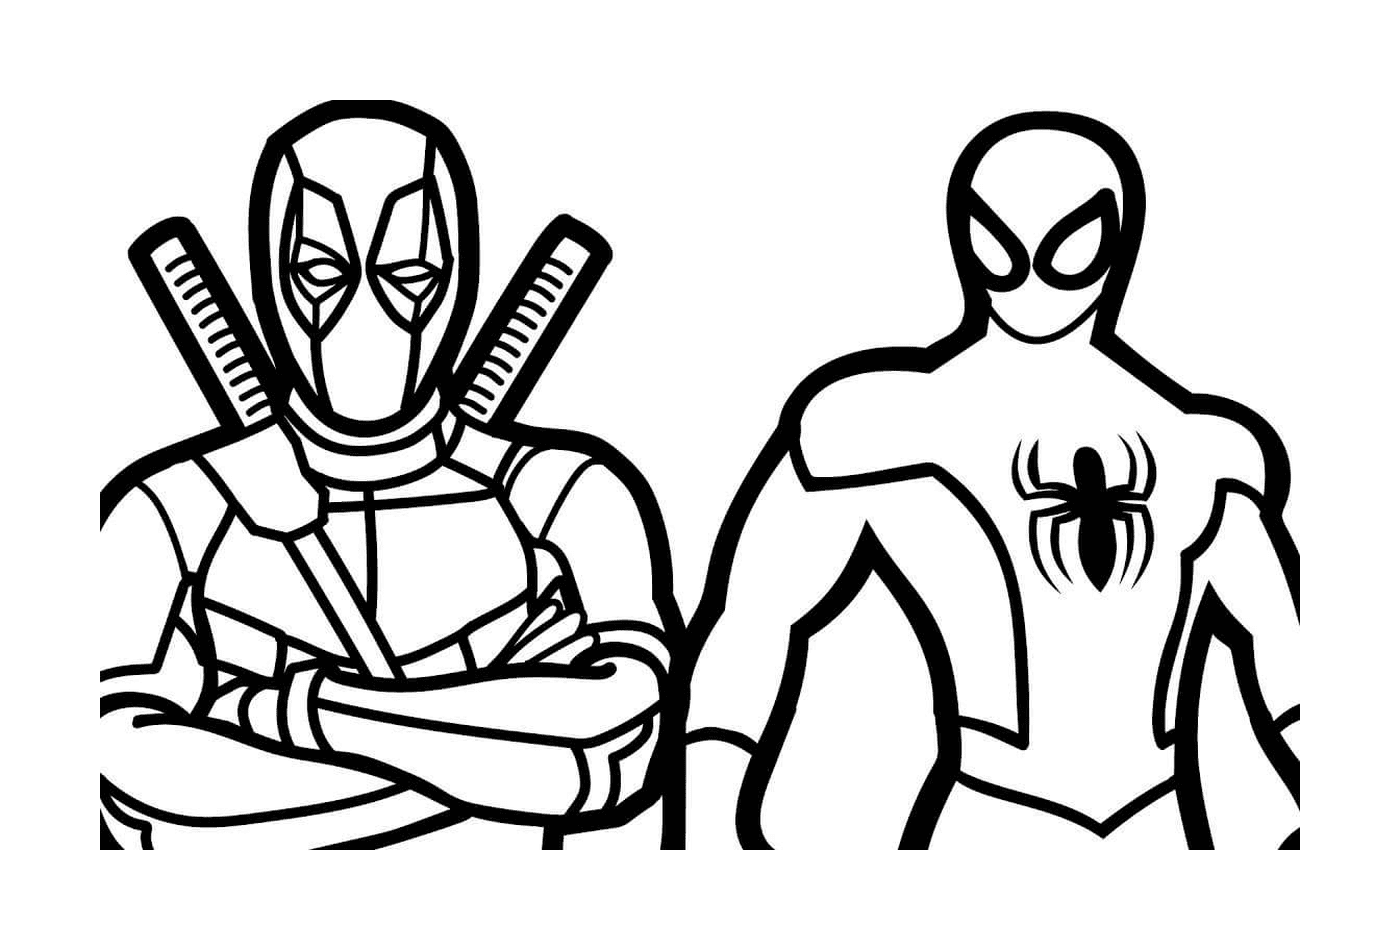  Spider-Man y Deadpool 